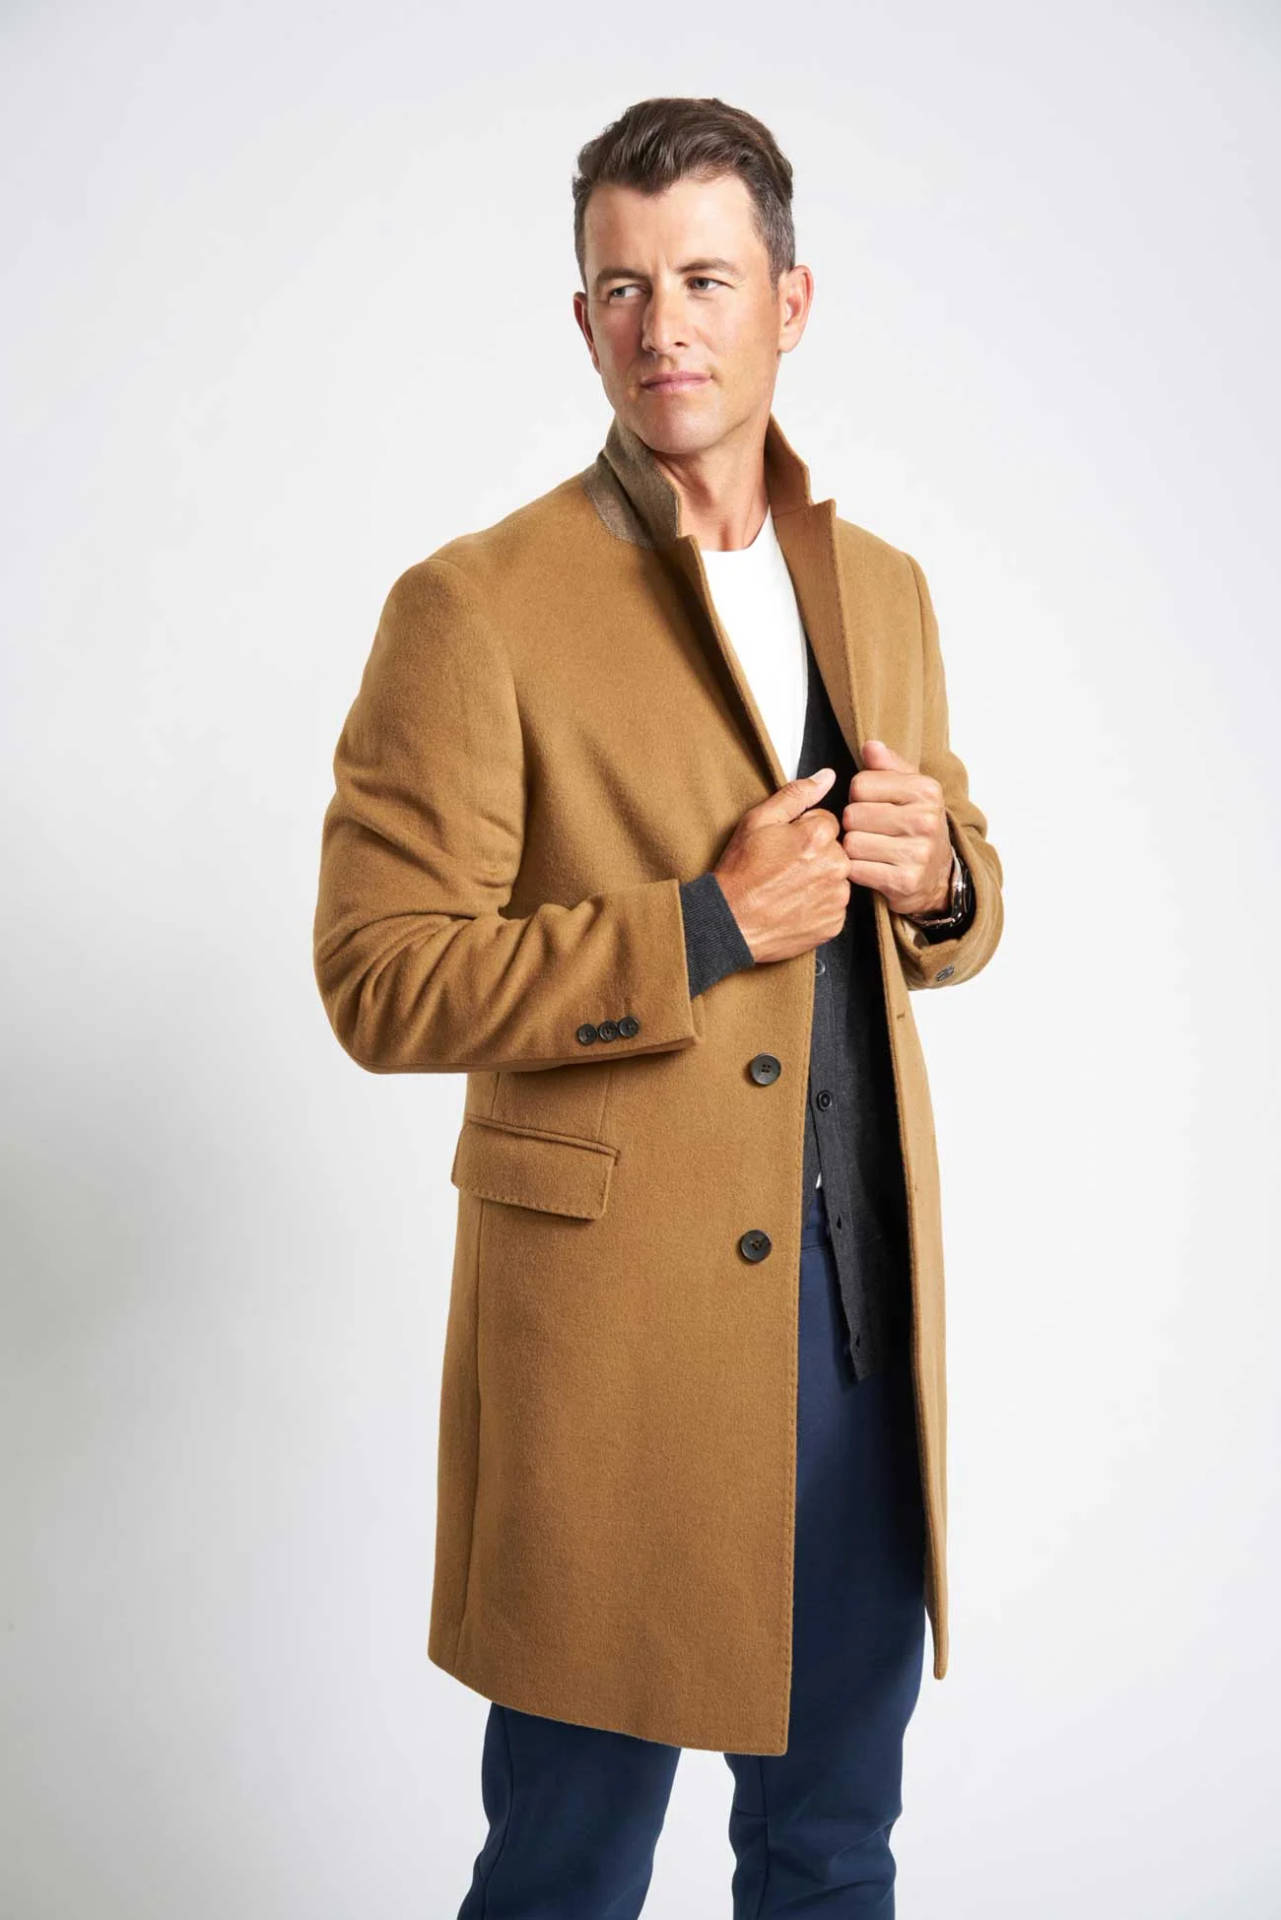 Download Adam Scott In Fashionable Trench Coat Wallpaper | Wallpapers.com